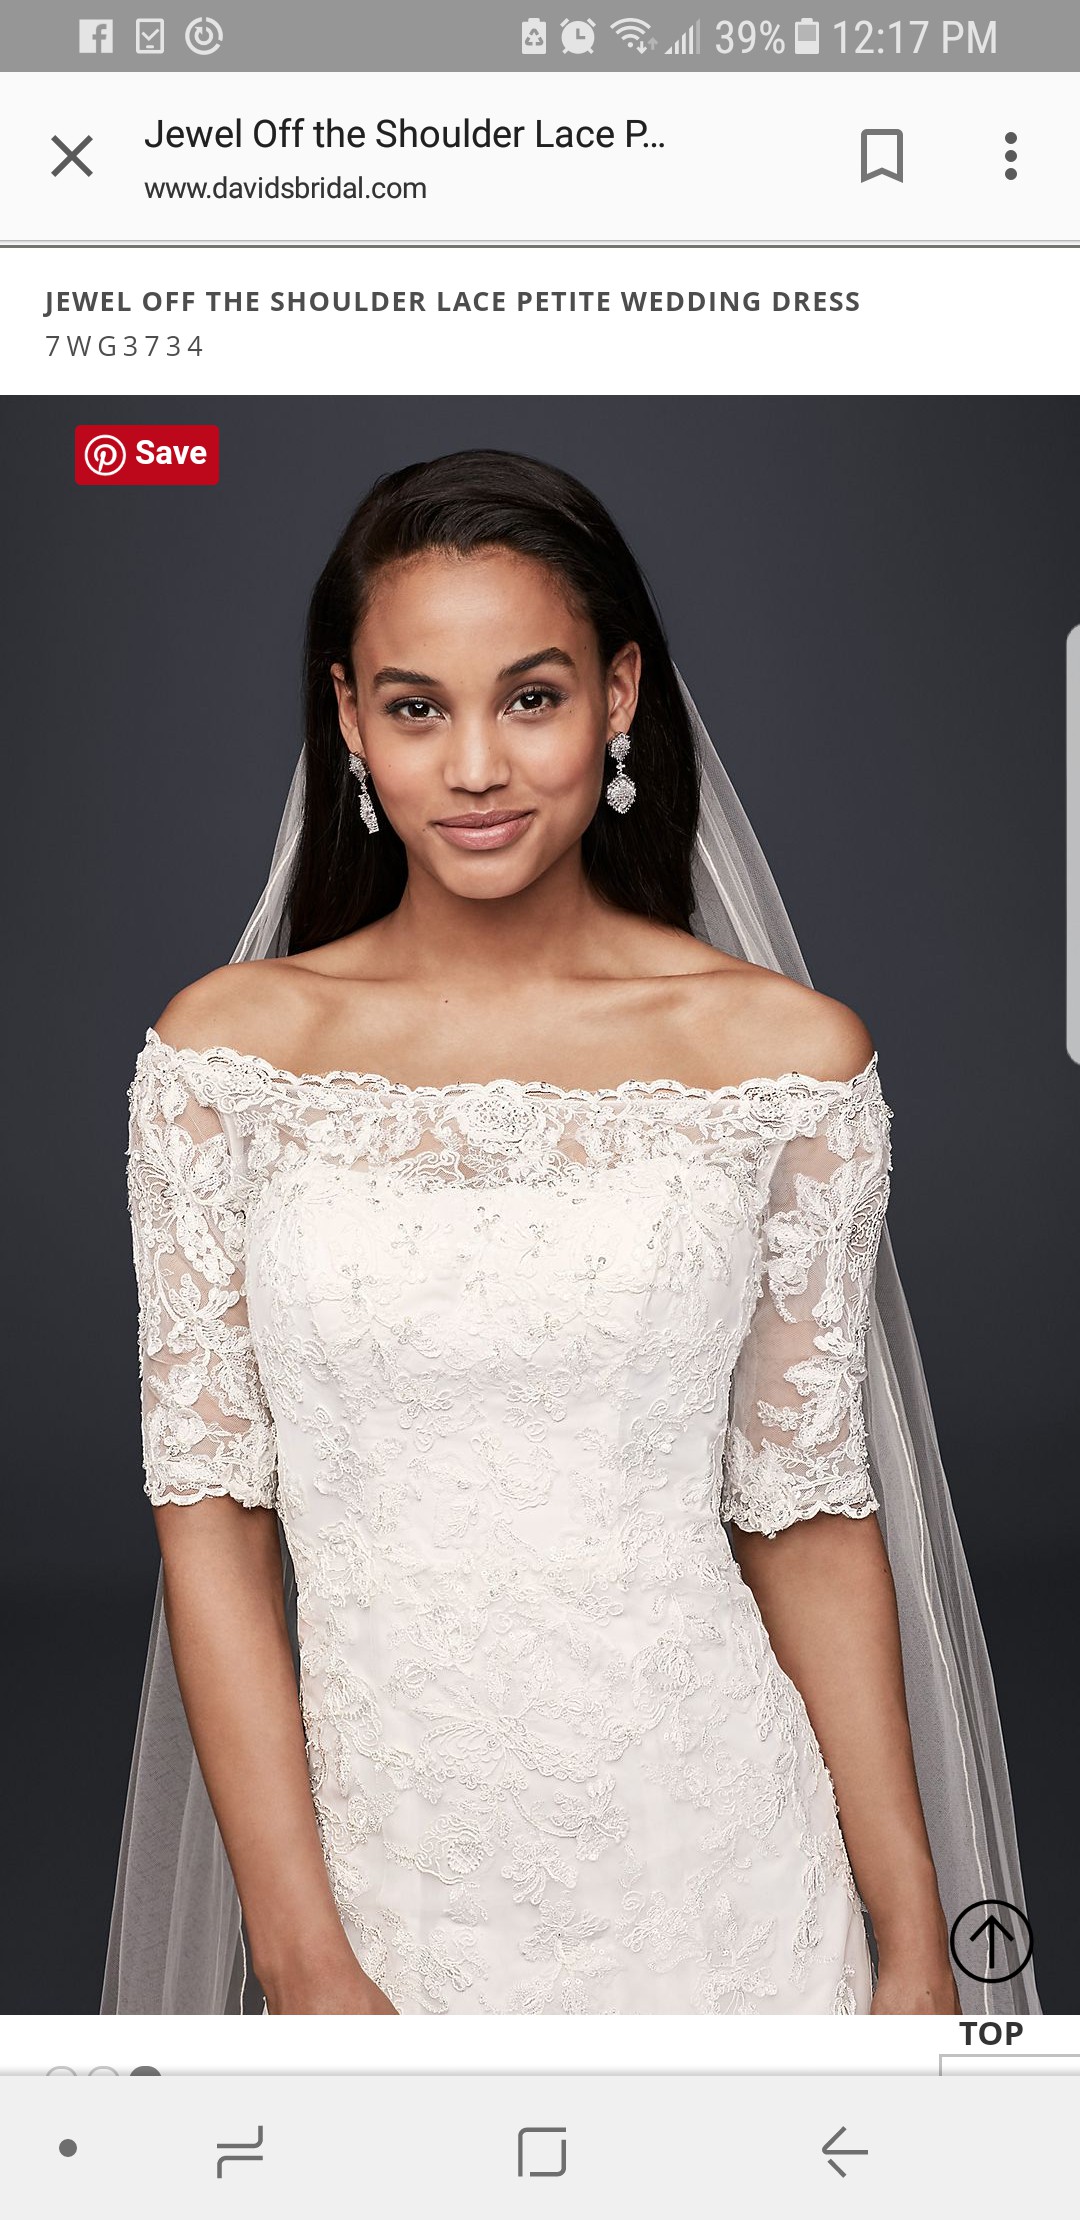 Jewel New Wedding Dress Save 50% - Stillwhite